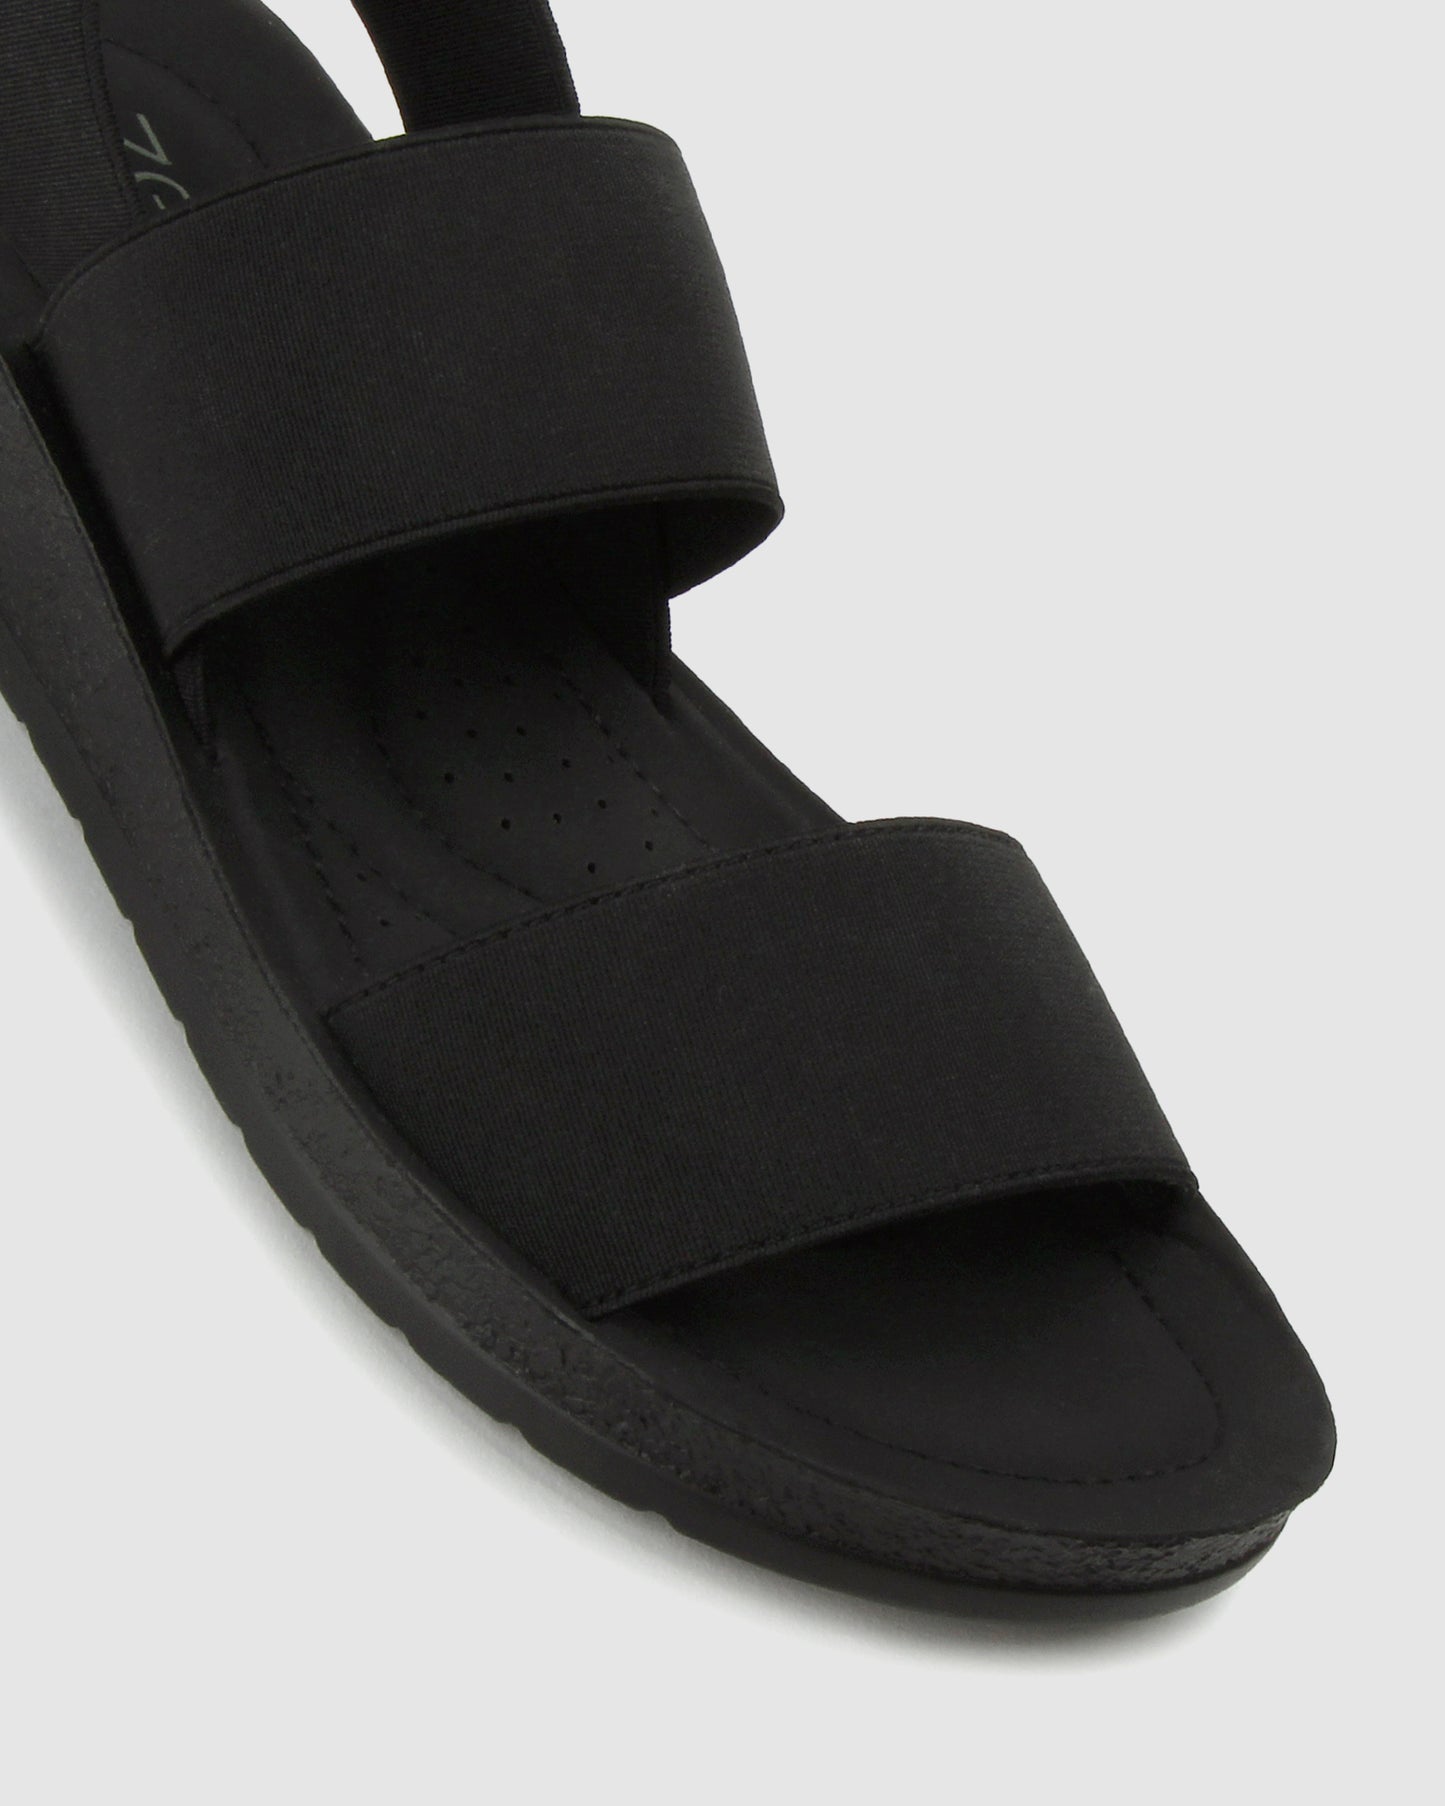 RISE Vegan Comfort Footbed Sandals